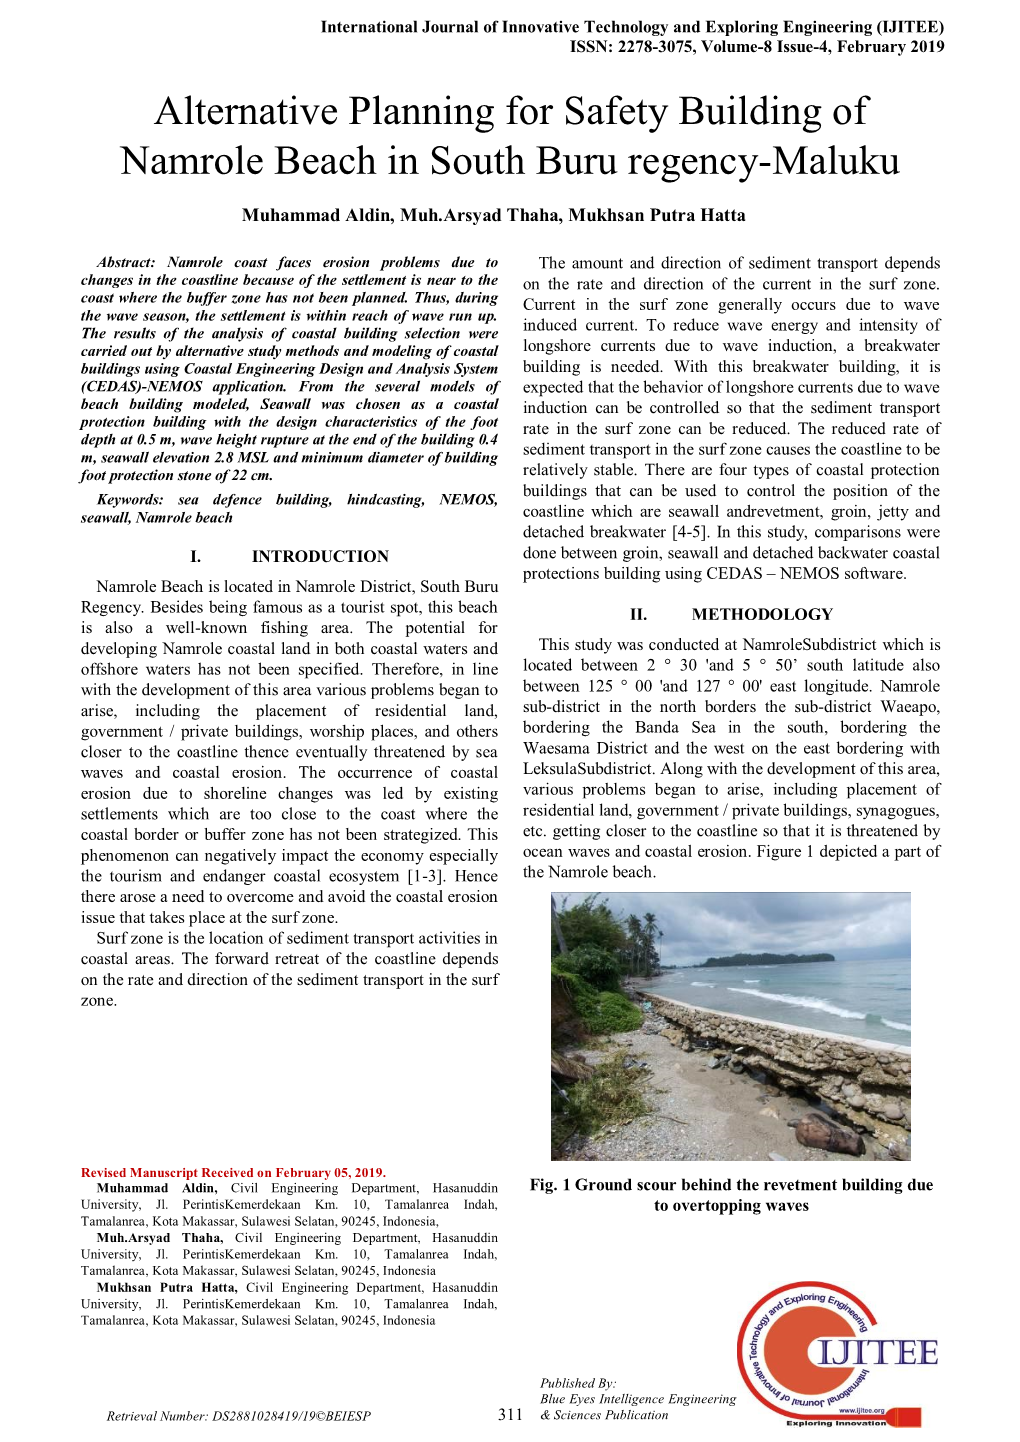 Alternative Planning for Safety Building of Namrole Beach in South Buru Regency-Maluku